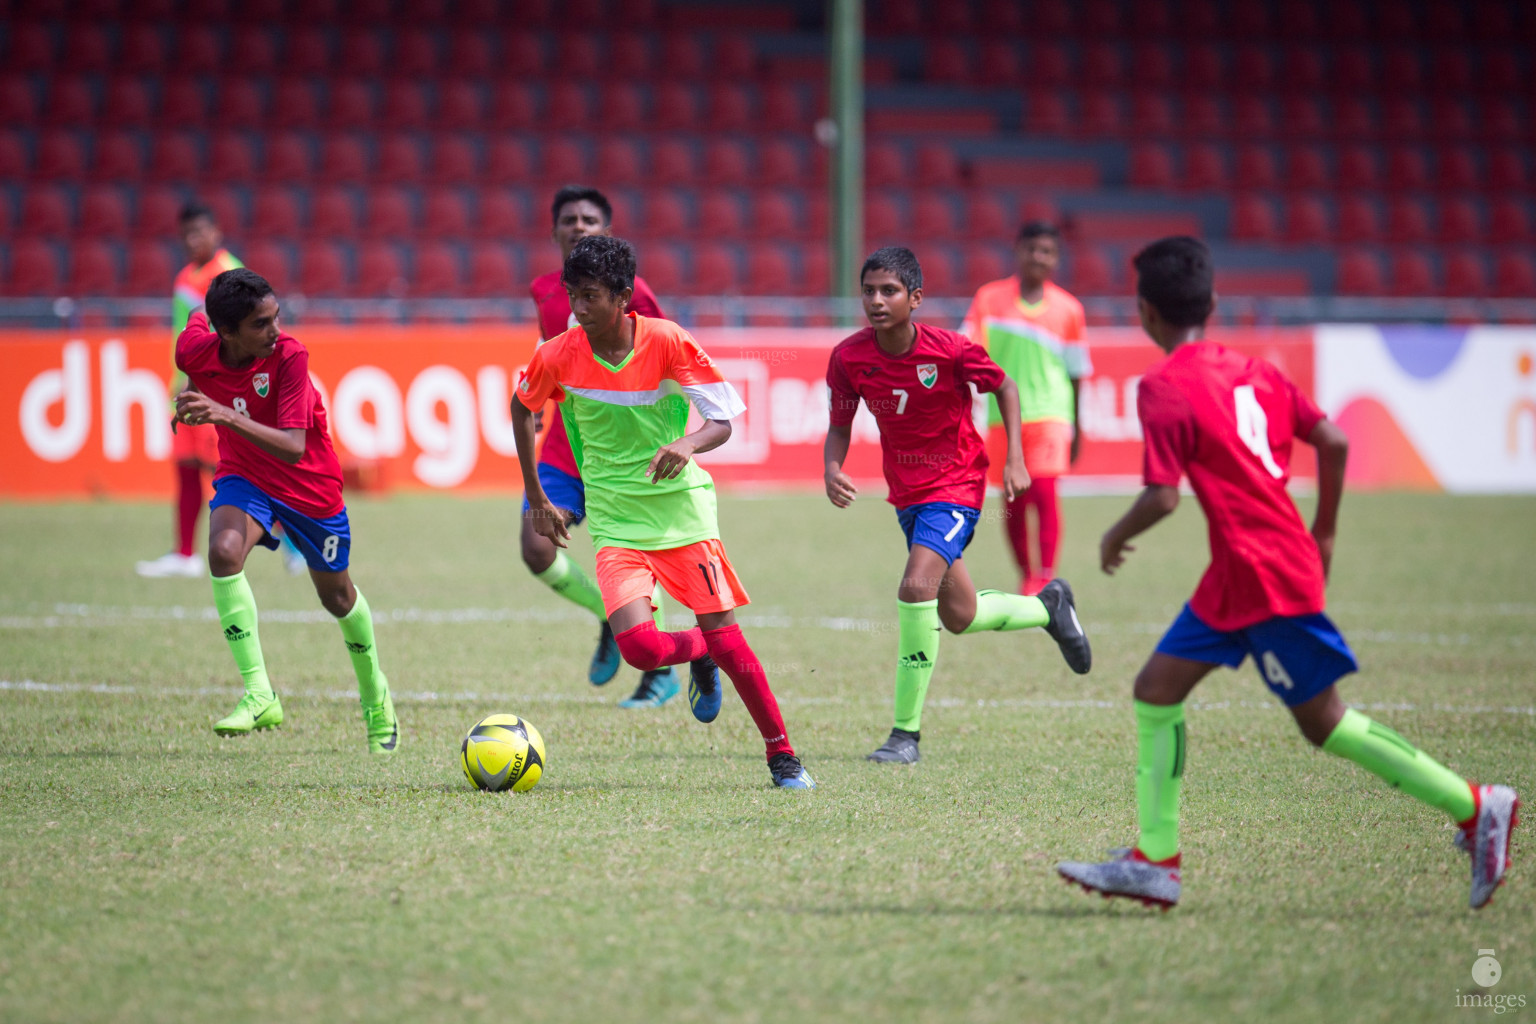 Huravee School vs Ghaazee School in Mamen Inter-School Football Tournament 2019 (U15) on 2nd March 2019, Saturday in Male' Maldives (Images.mv Photo: Suadh Abdul Sattar)